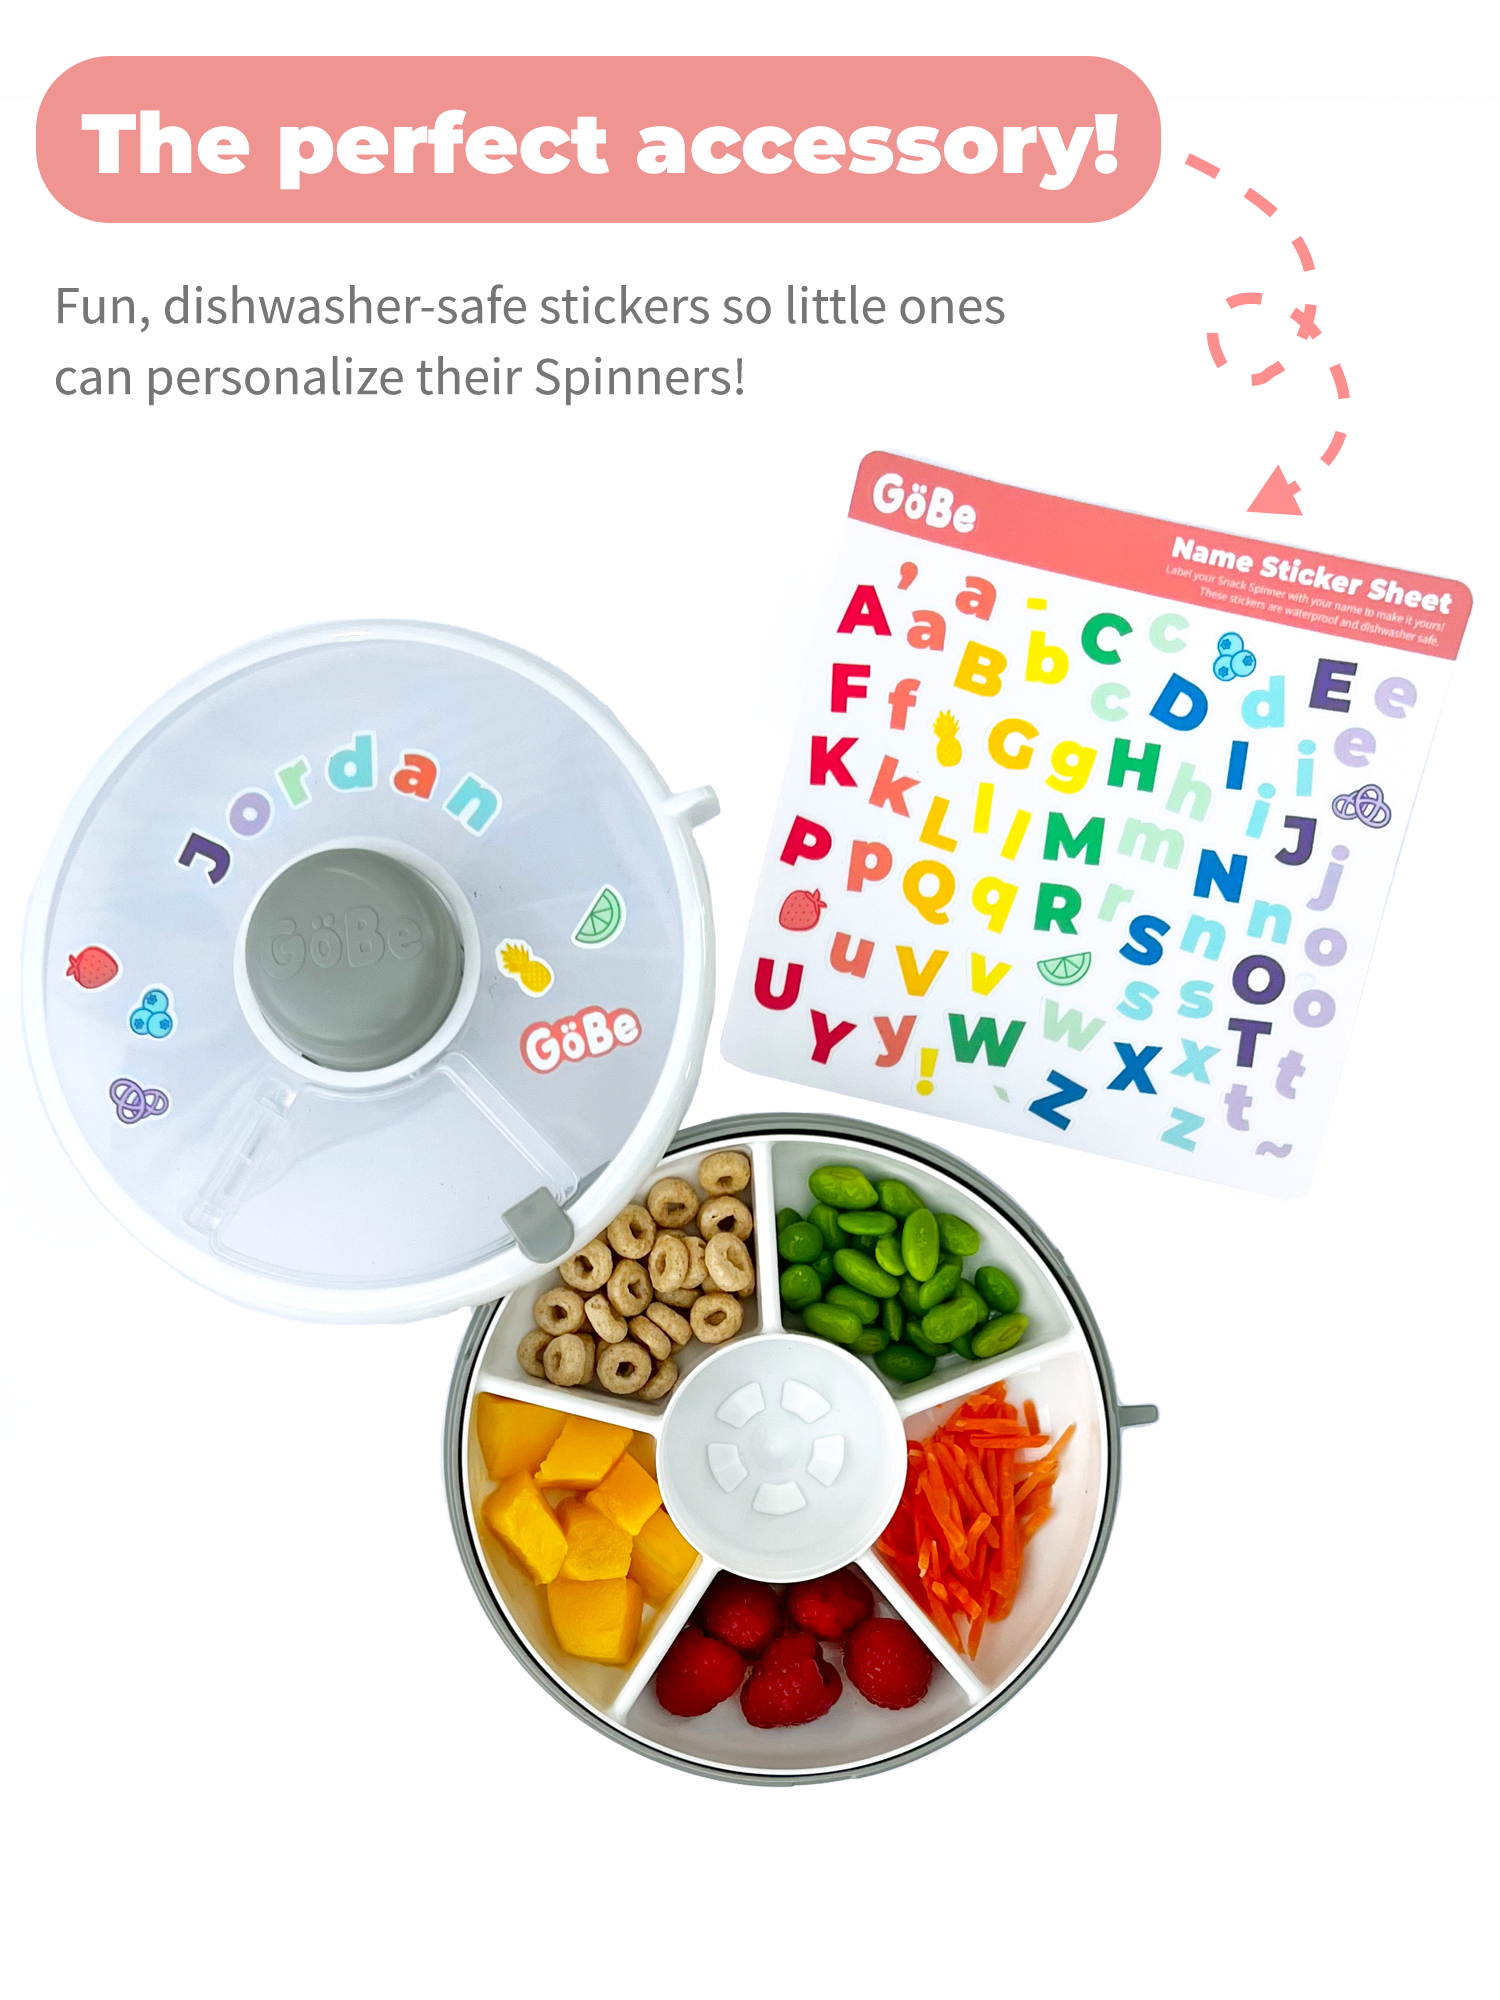 Gingham Girlies Sunshine Sticker Sheet: Craft Stickers for Kids